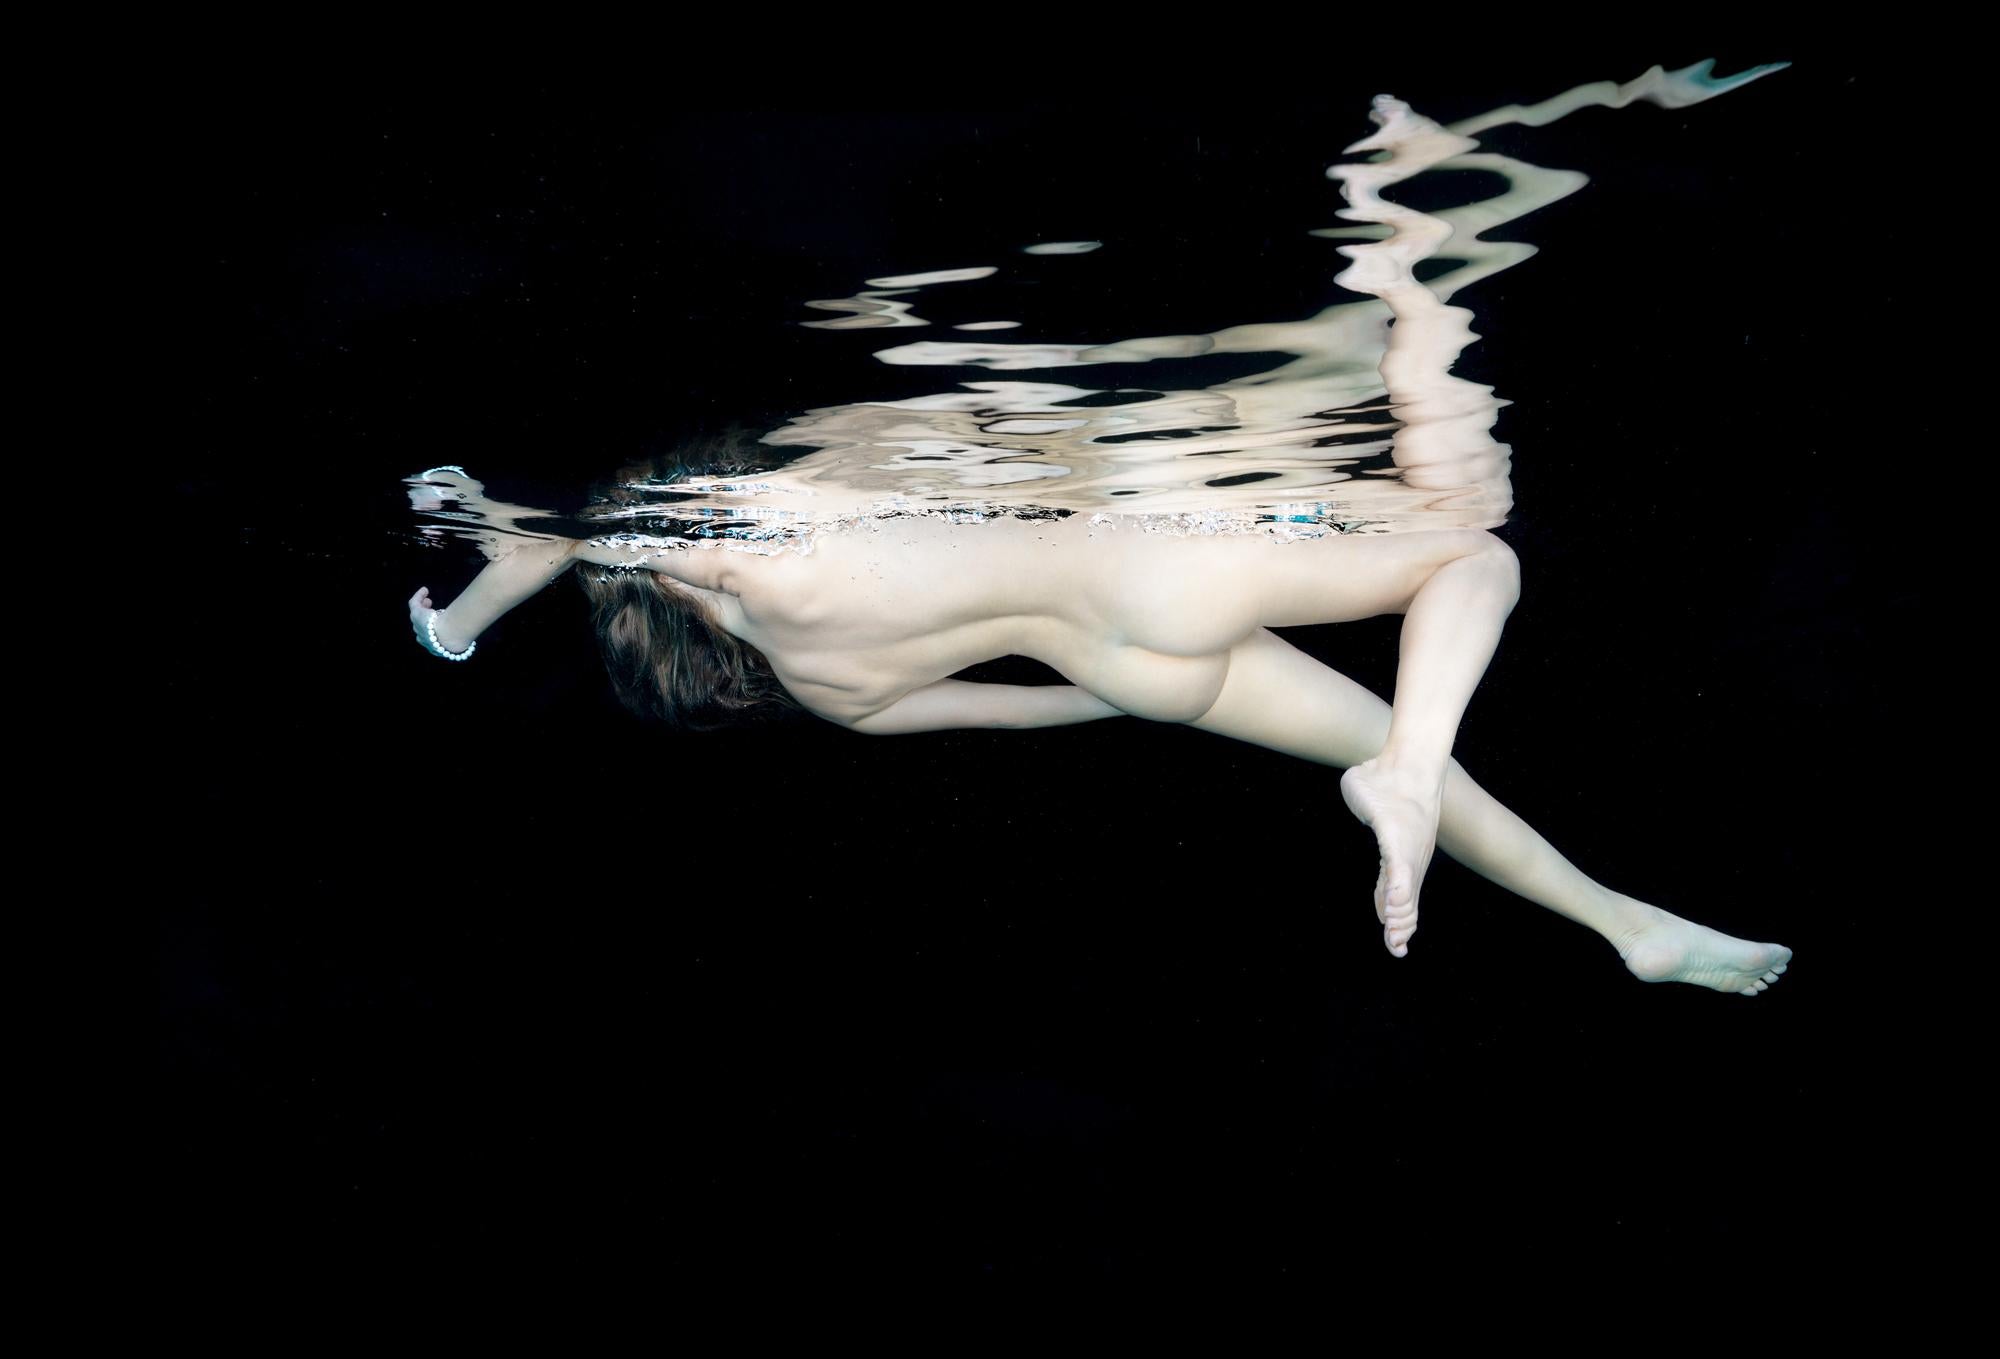 Alex Sher Nude Photograph - Porcelain II  - underwater nude photograph - print on aluminum 24x36"